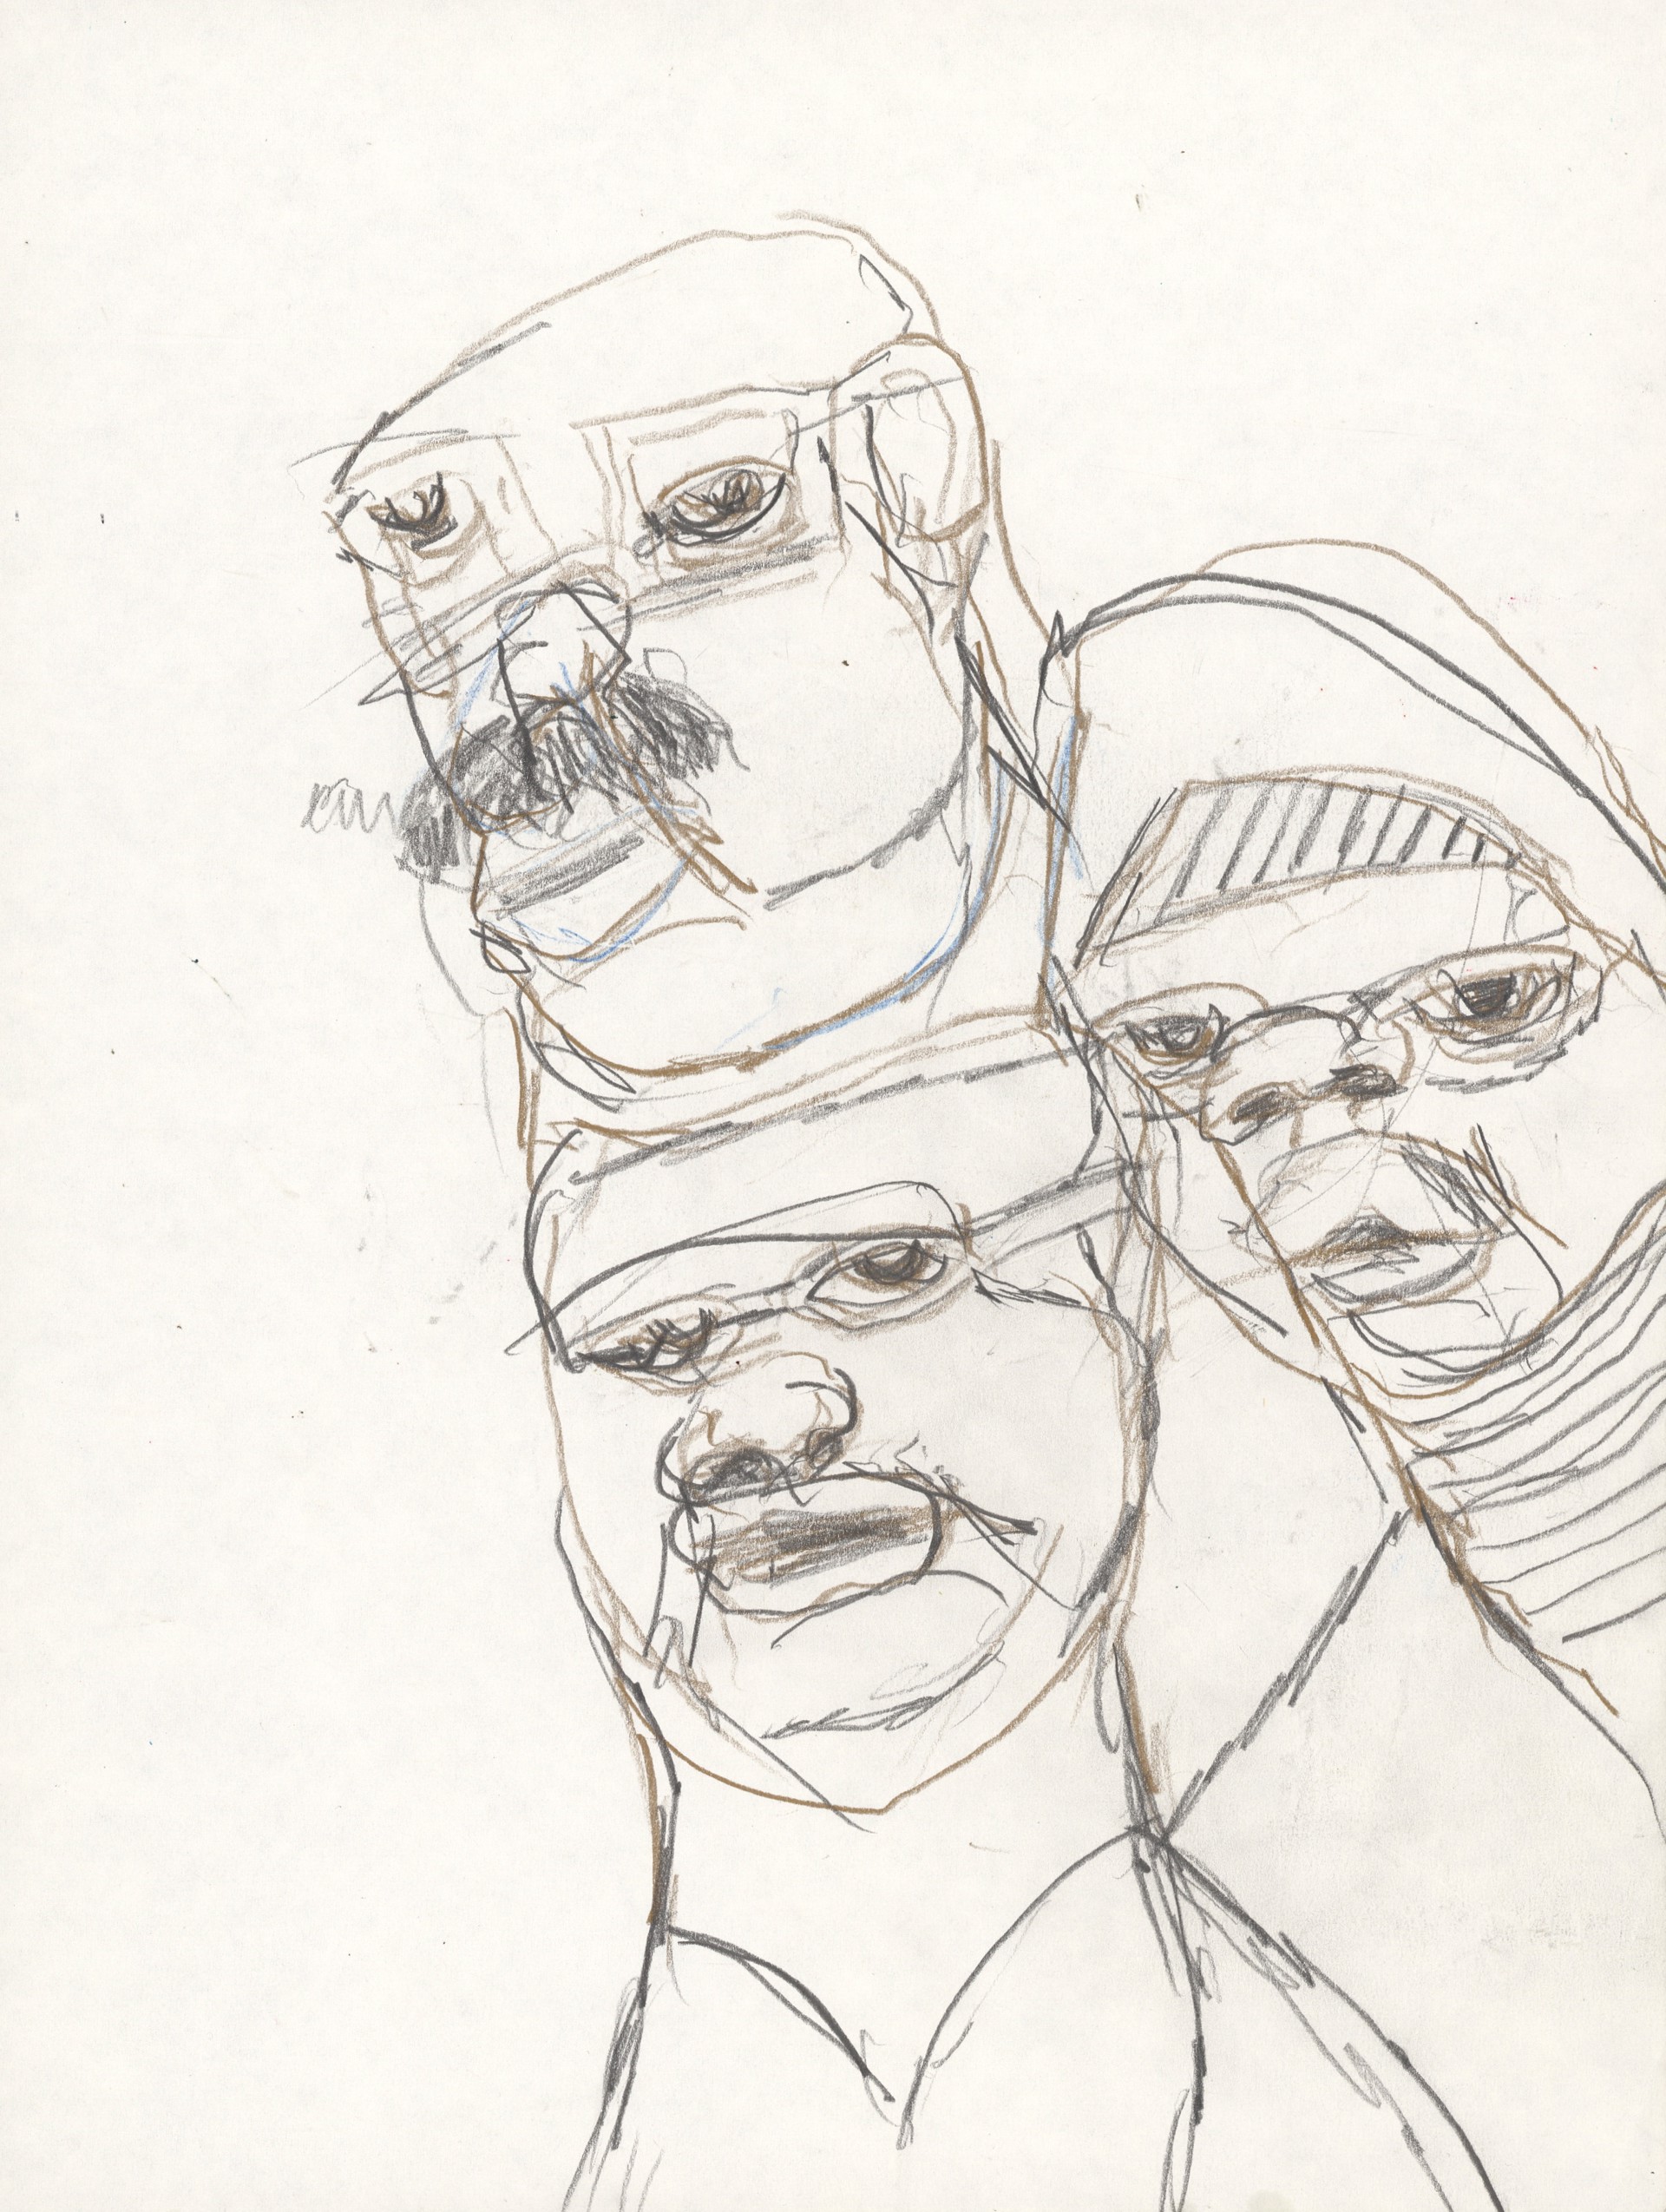 Trio Sketch by Egbert "Clem" Evans